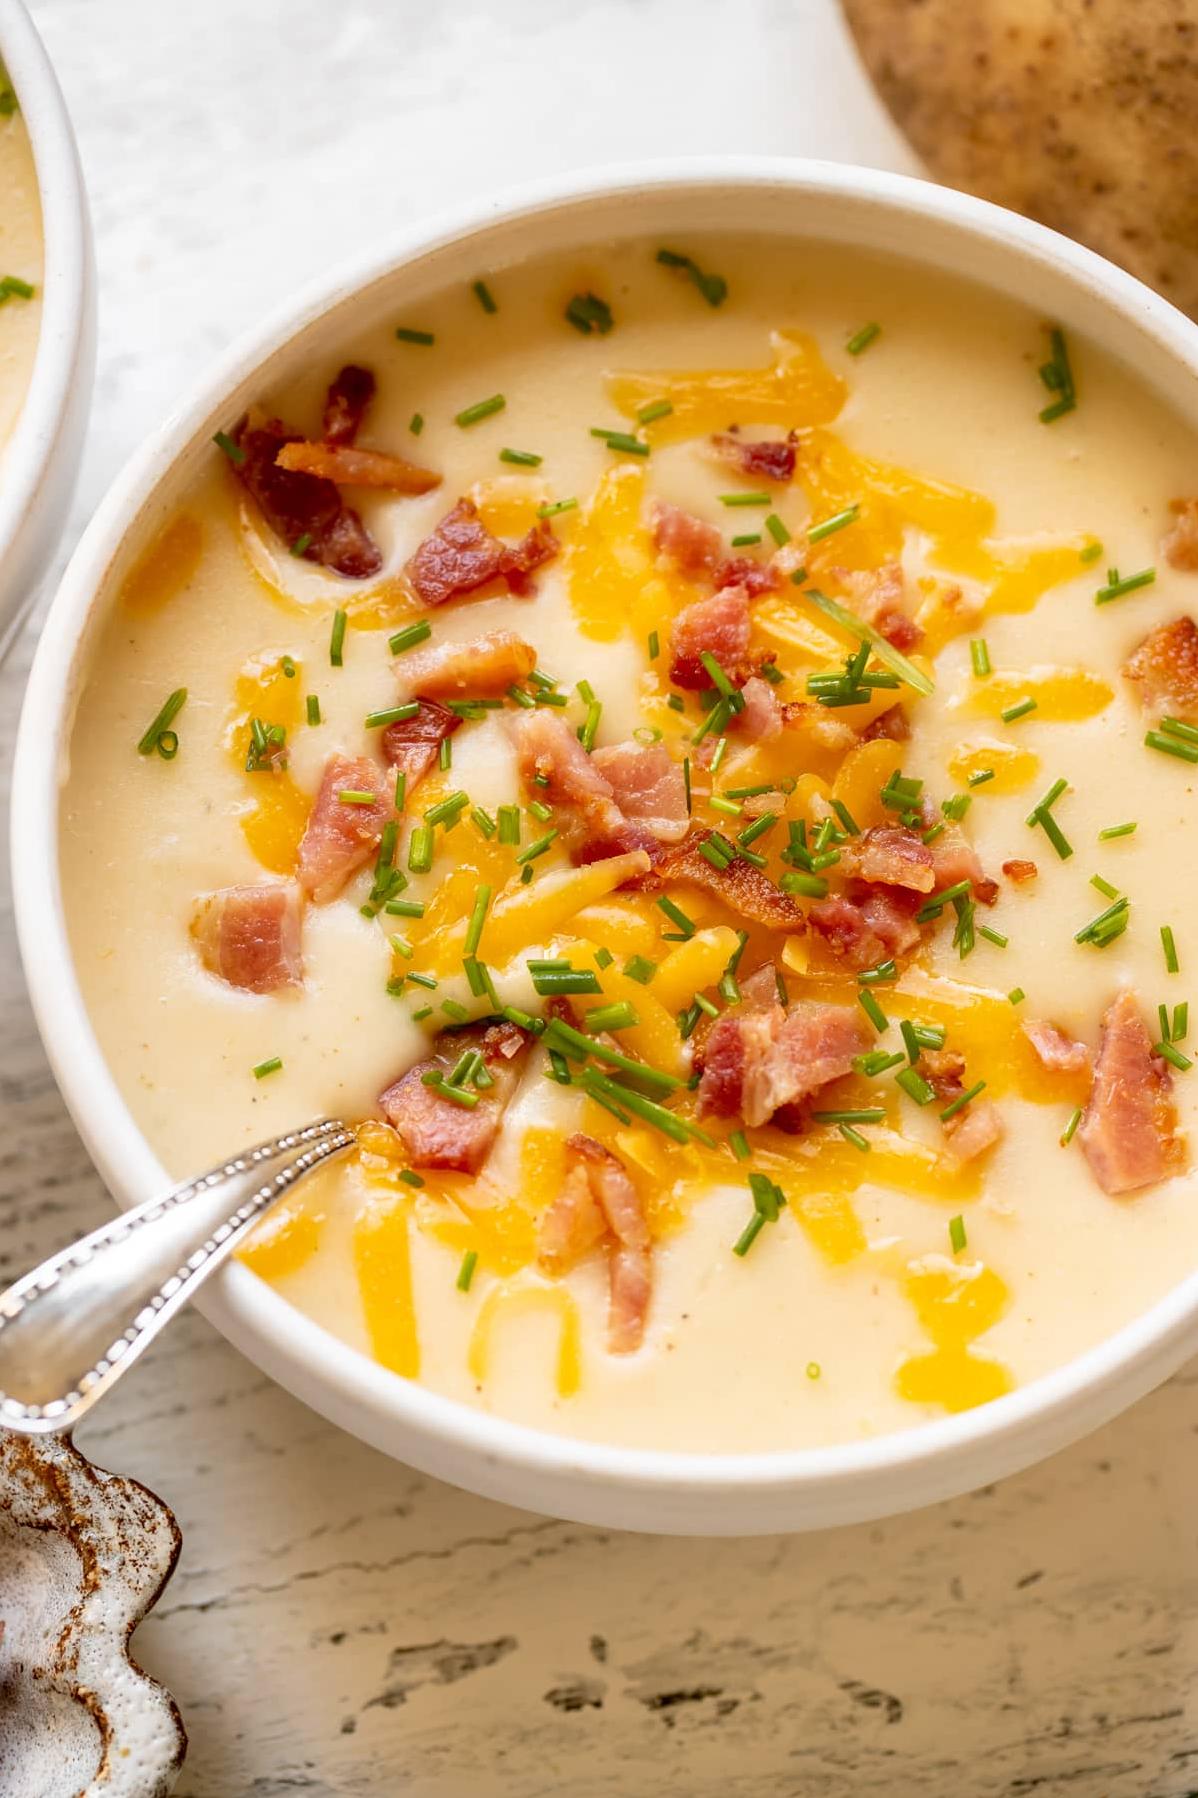  Creamy and dreamy: gluten-free baked potato soup!